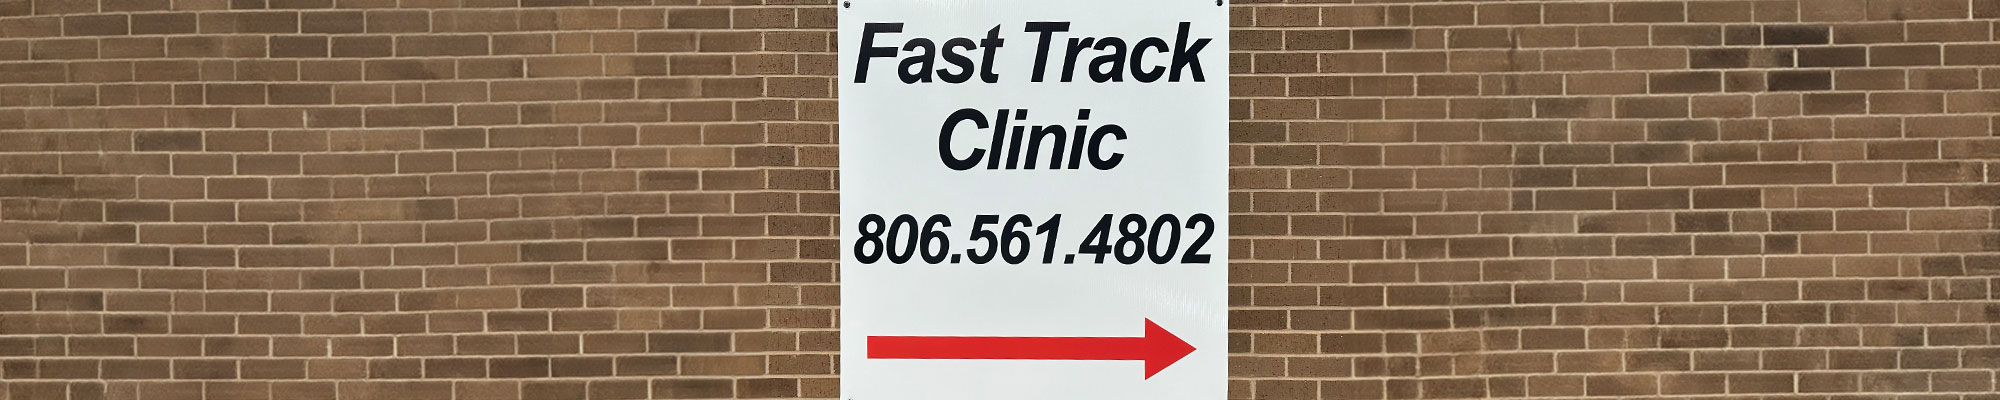 LCHD’s Fast Track Clinic
806.561.4802